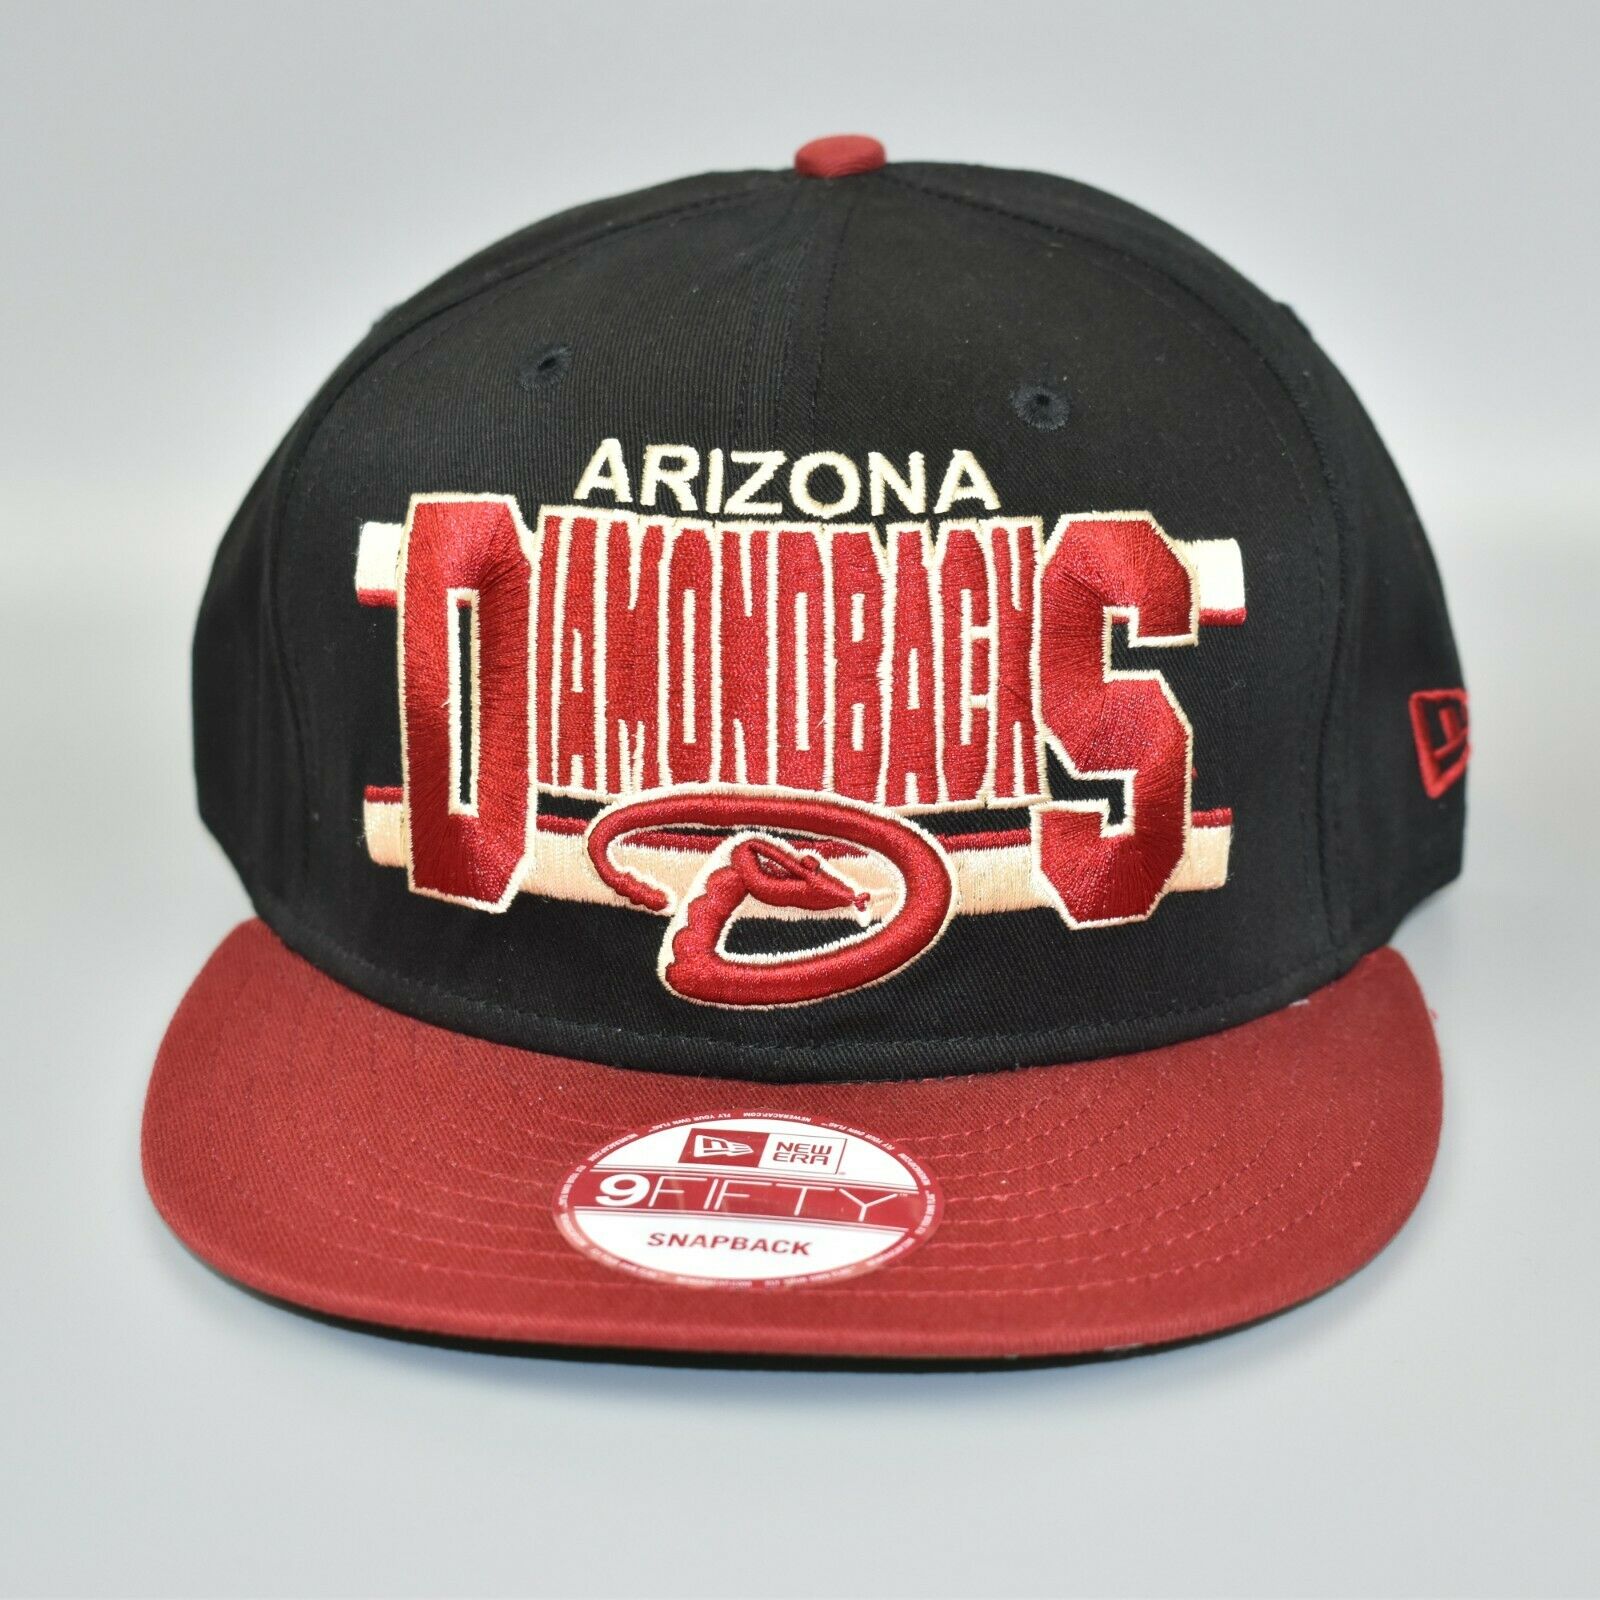 Los Angeles Lakers Logo Side Swipe 9FIFTY New Era Fits Snapback Hat